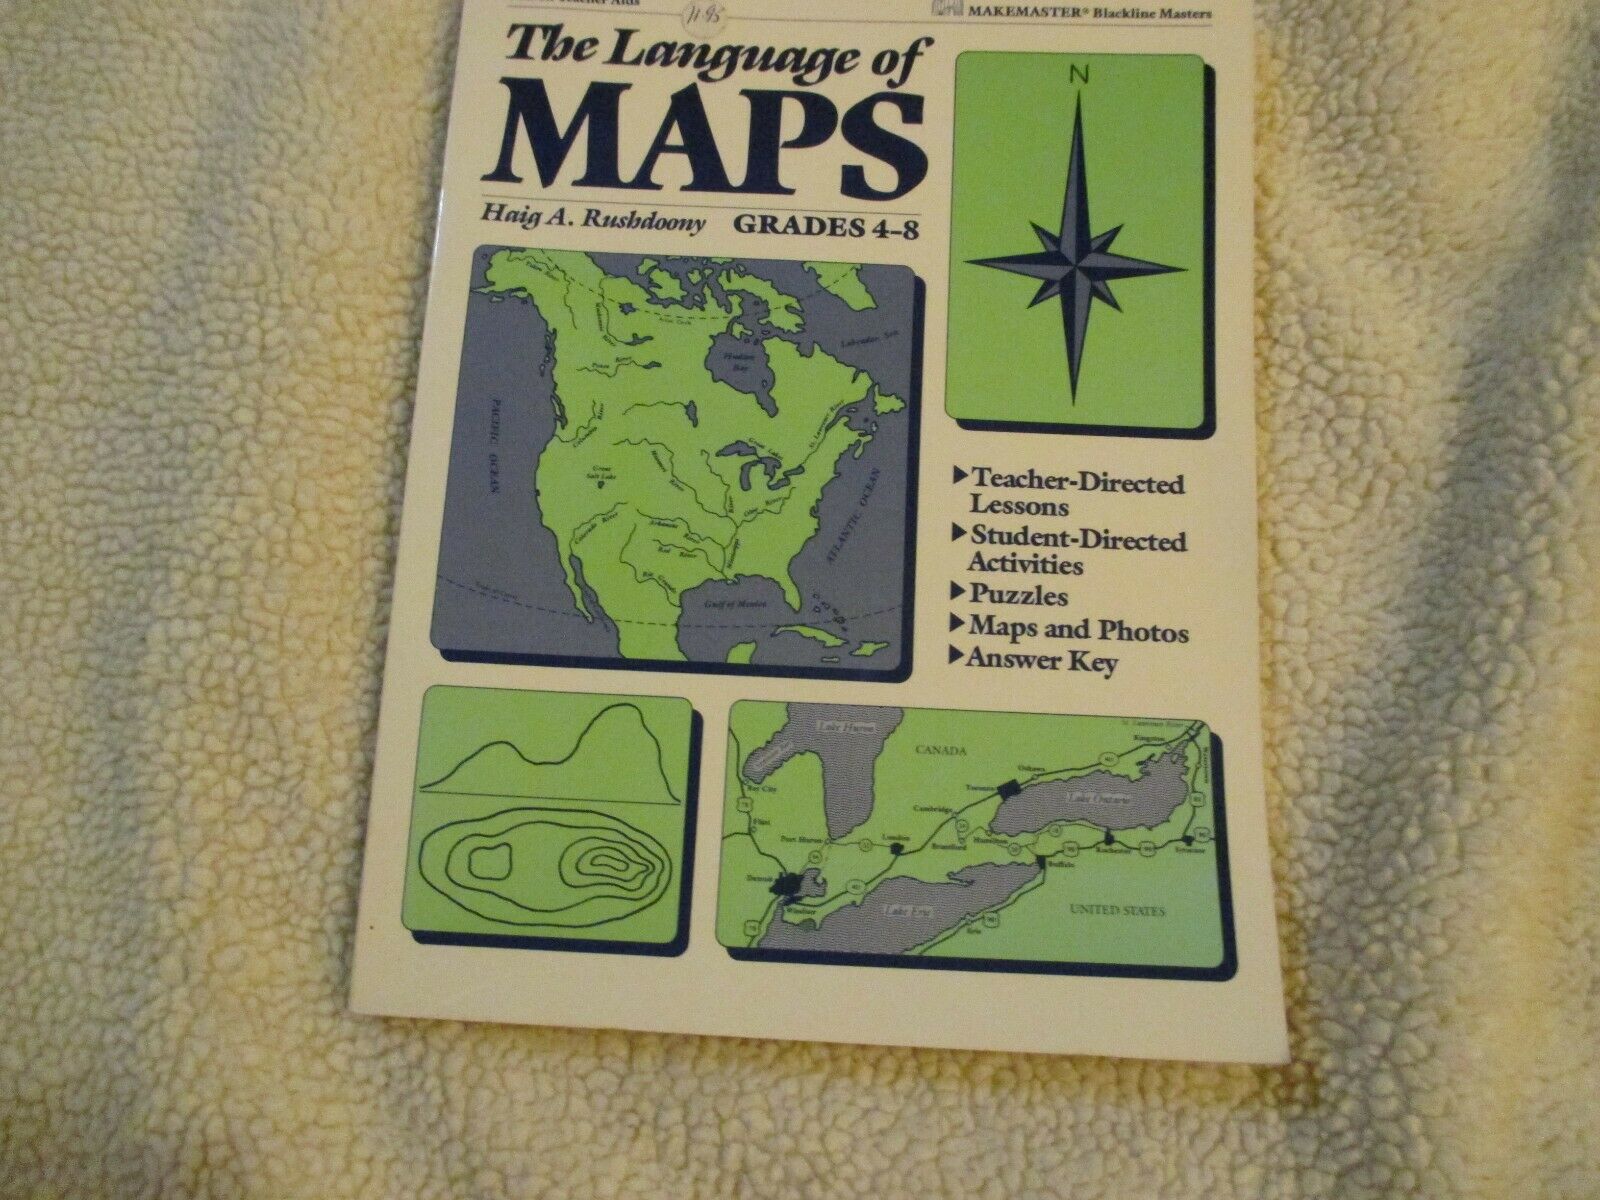 THE LANGUAGE OF MAPS GRADES 4-8